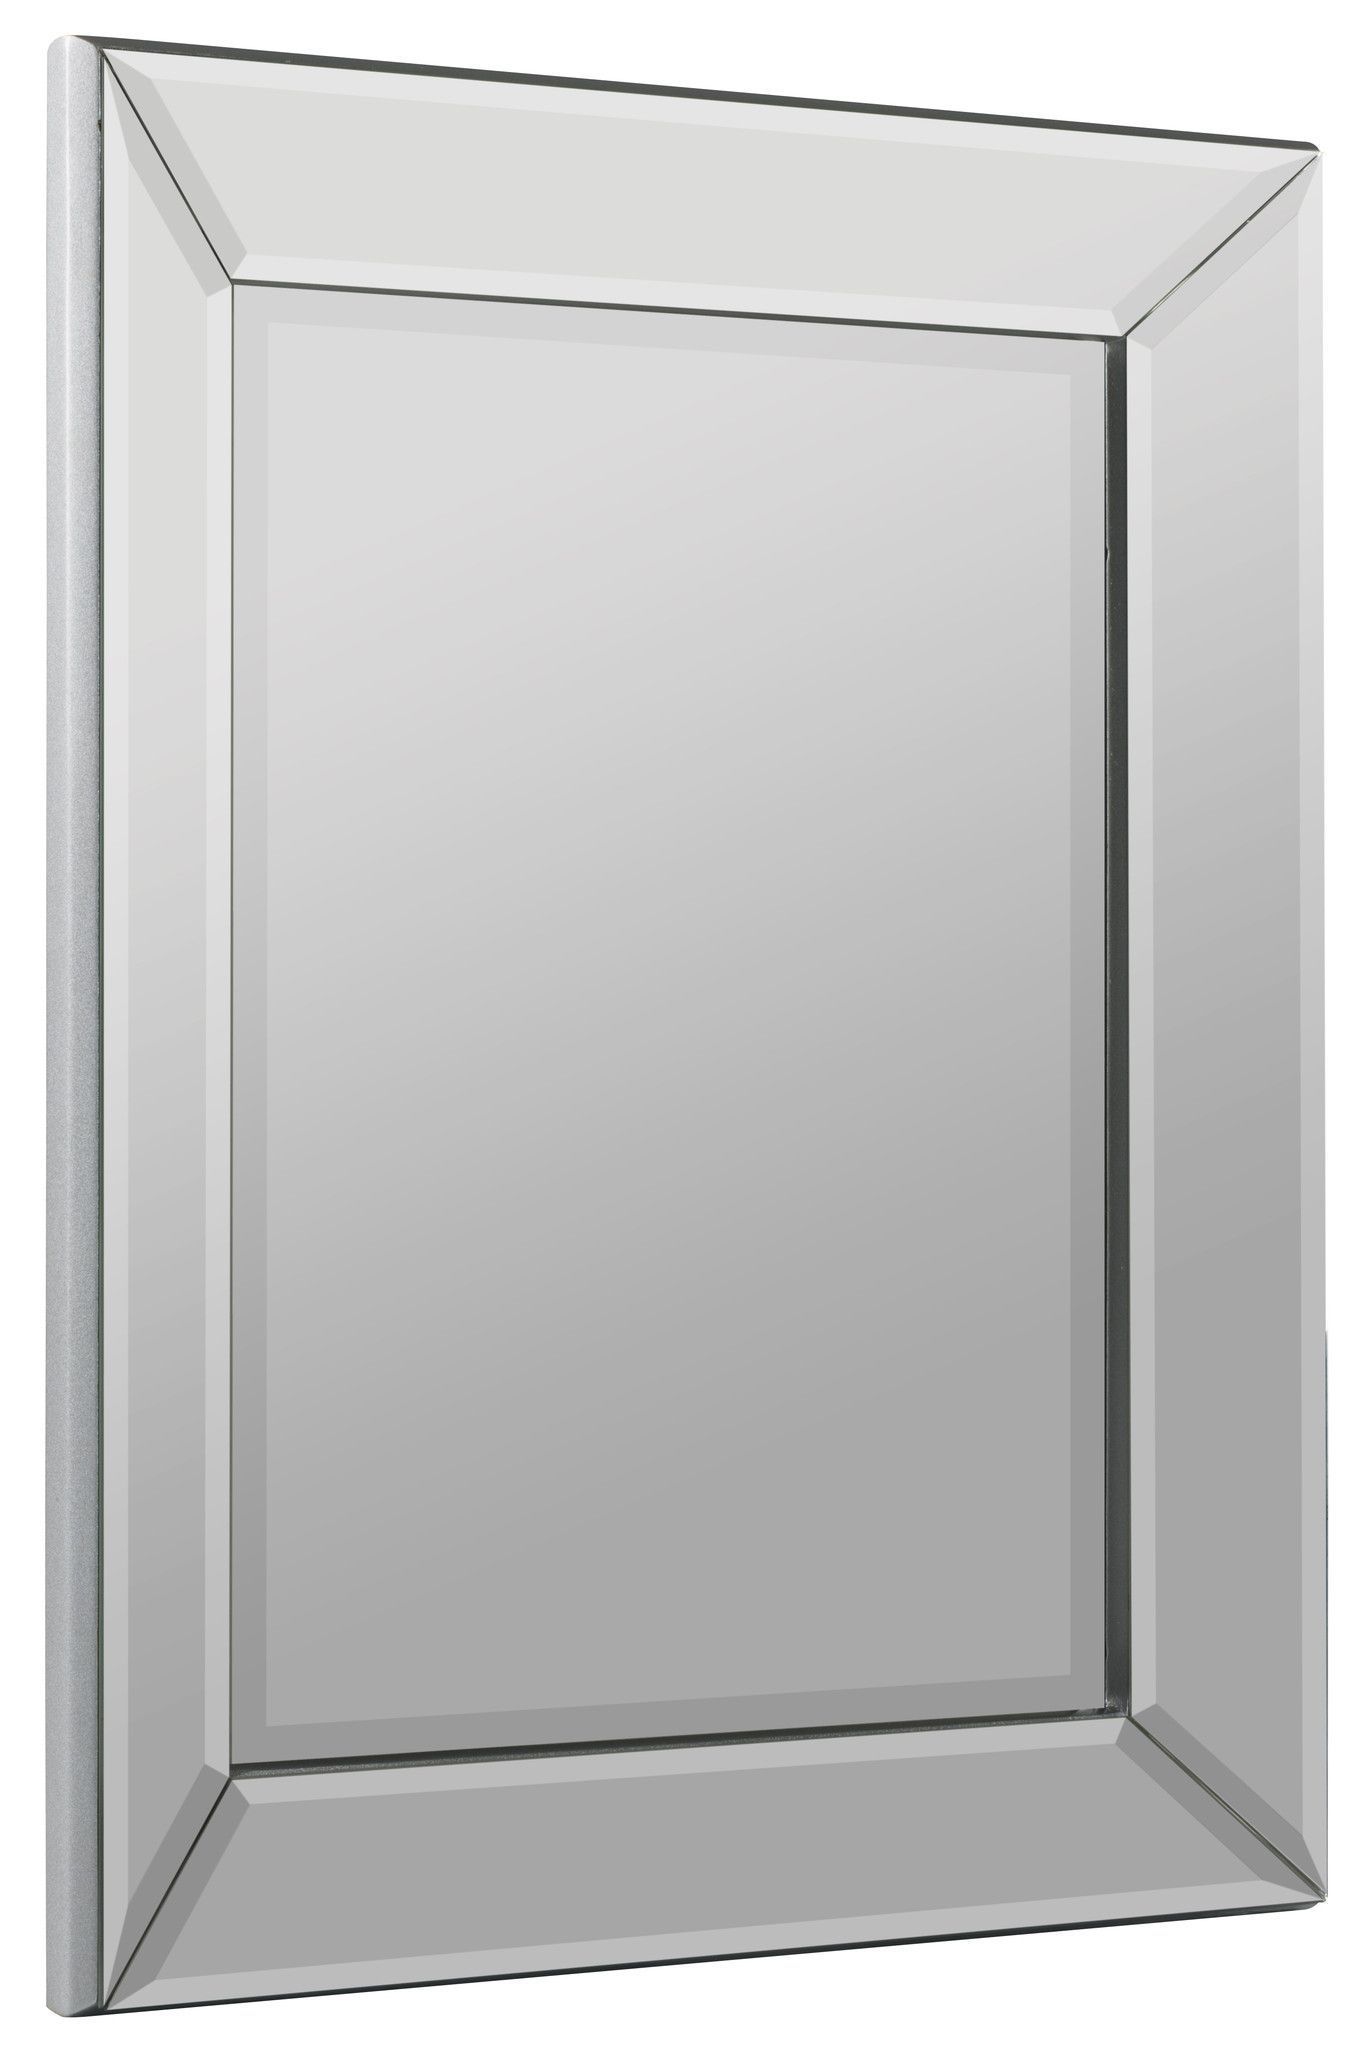 Porter Mirror Frameless Mirror; Beveled Mirror | Diy Bathroom Remodel Regarding Square Frameless Beveled Wall Mirrors (View 1 of 15)